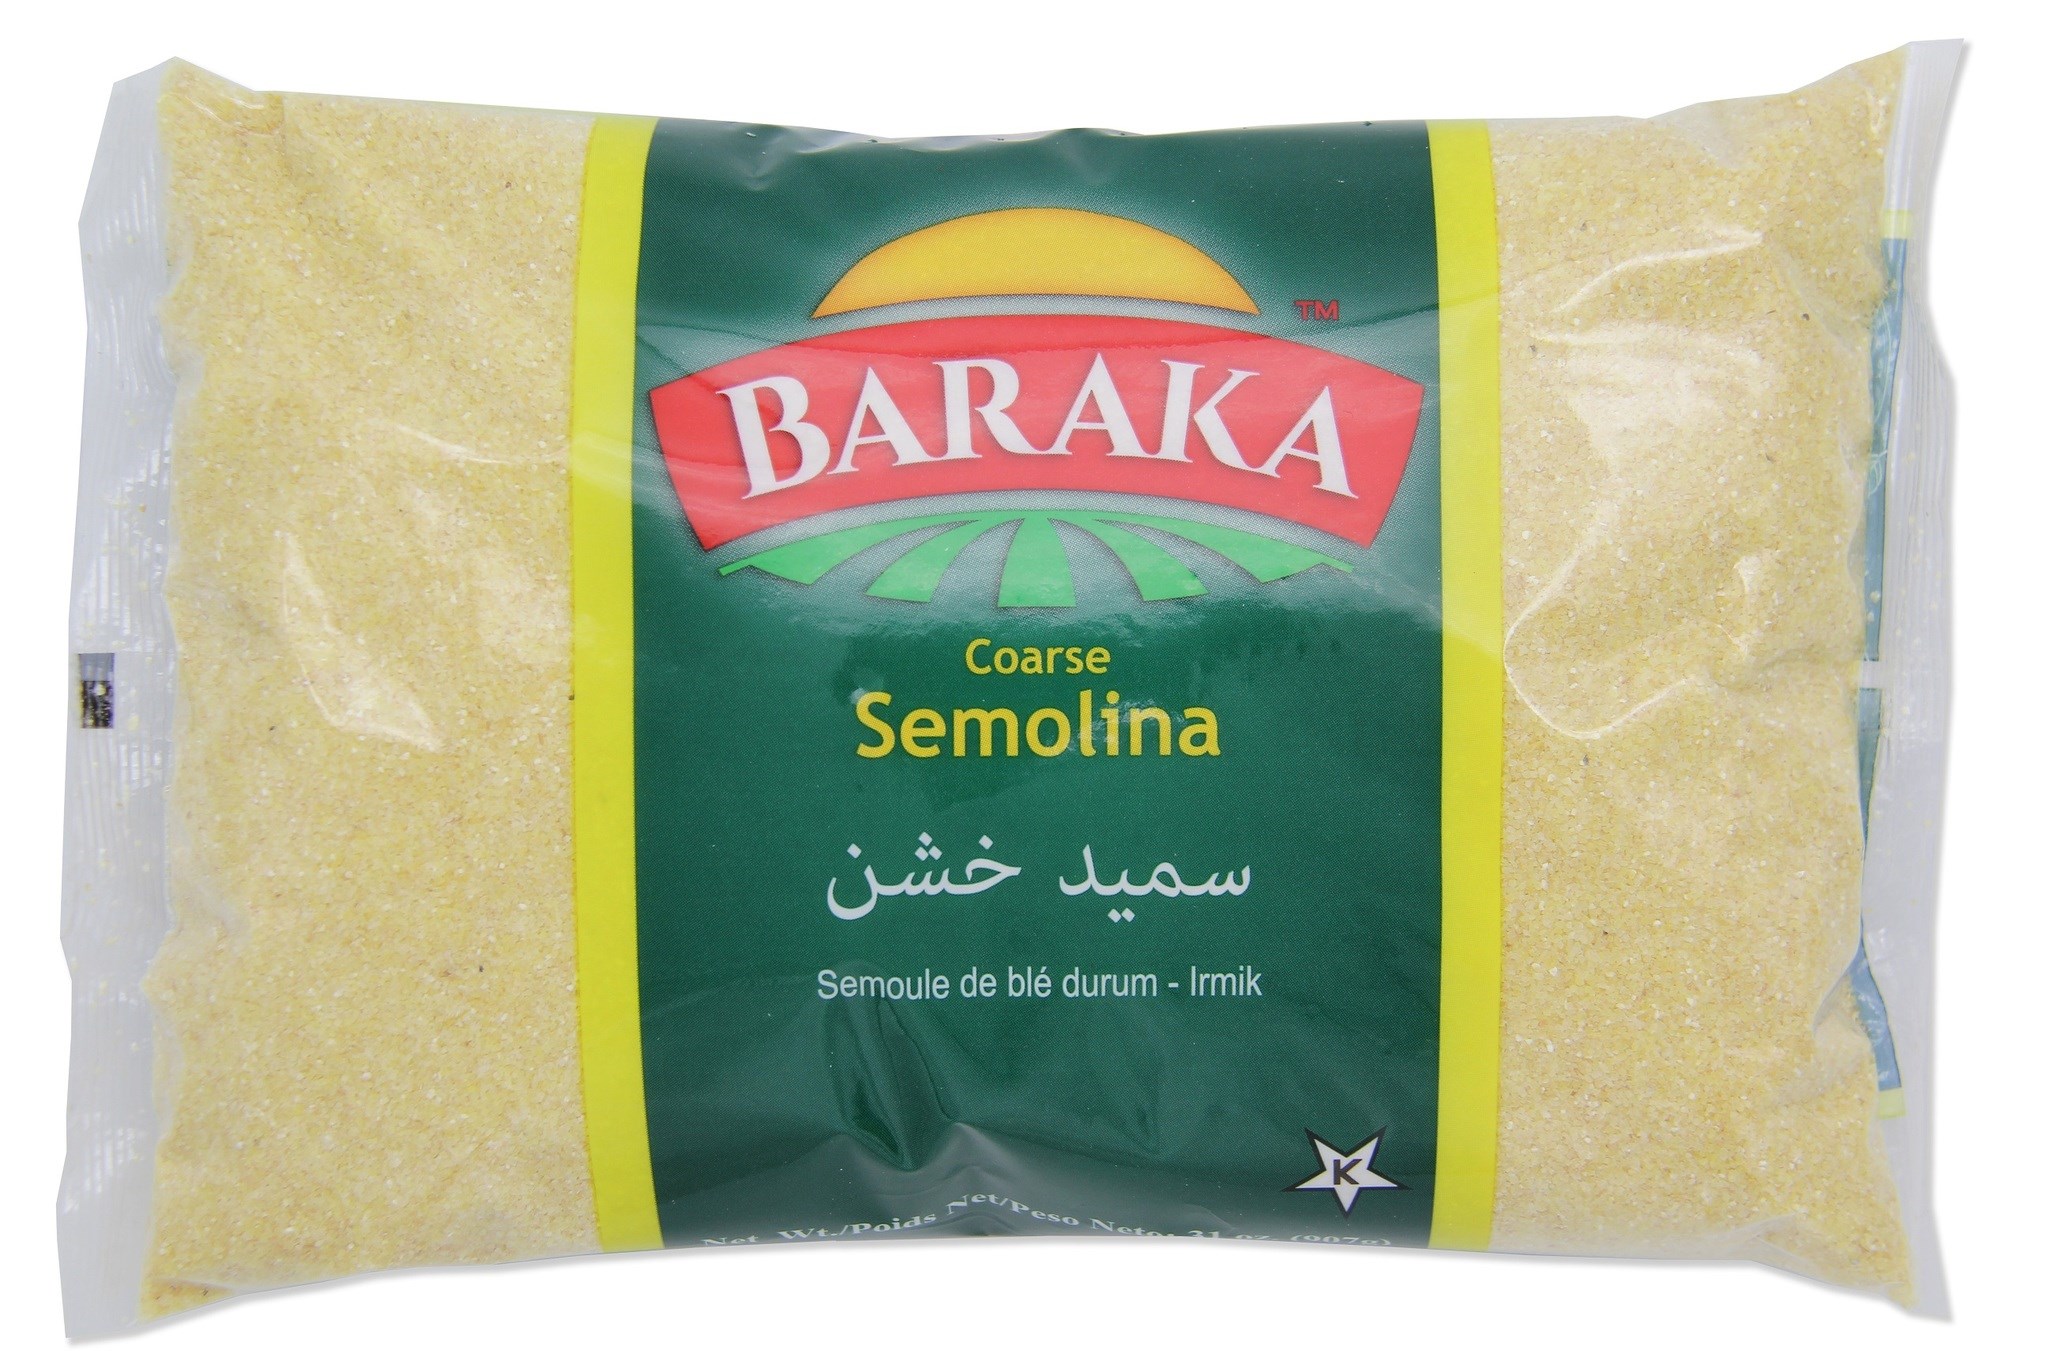 Coarse Semolina Bag # 3 “Baraka” – Baraka